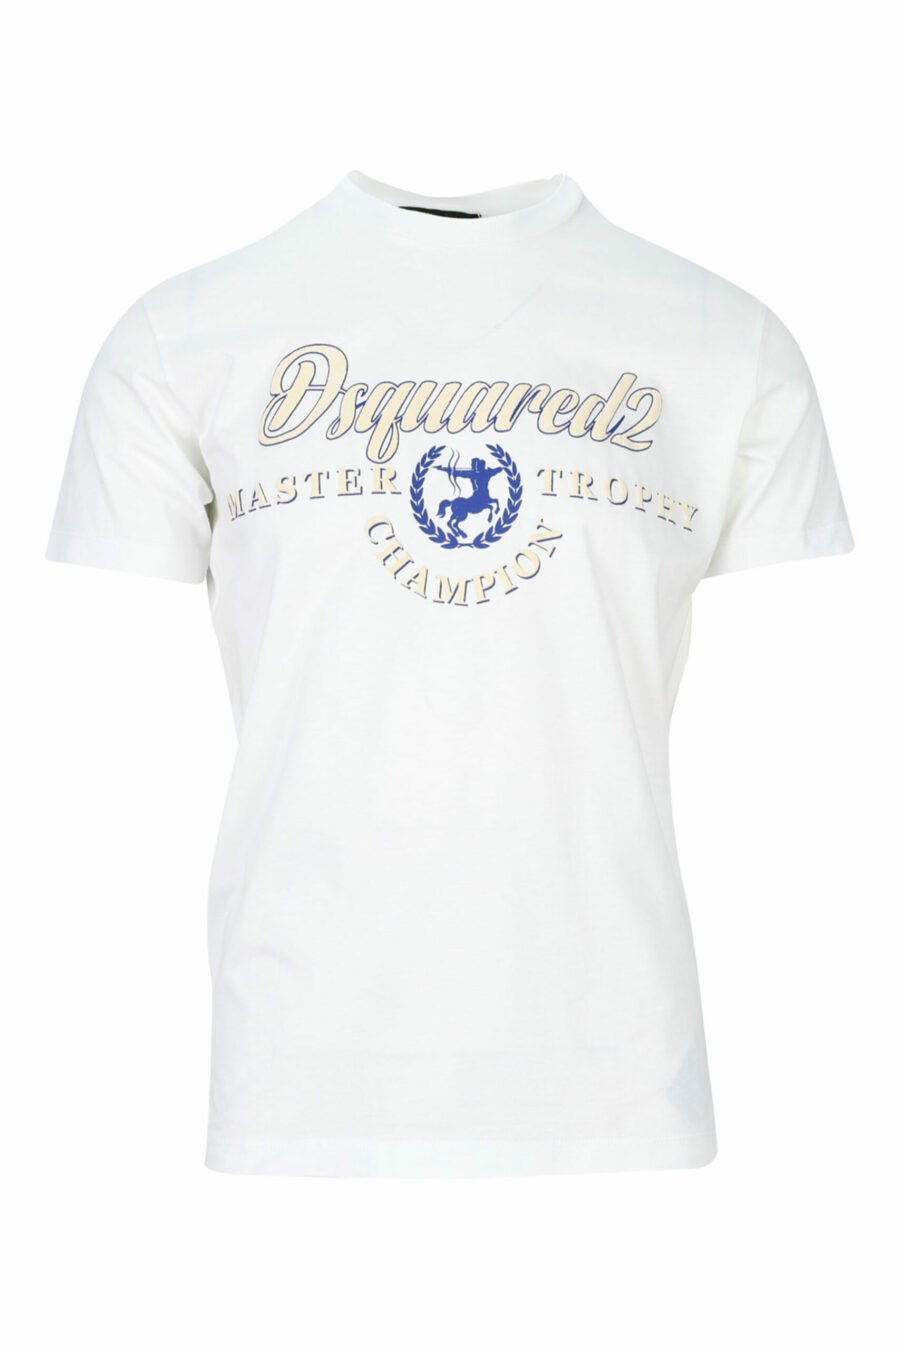 T-shirt blanc avec maxilogo blanc et bleu avec bouclier - 8054148159665 scaled